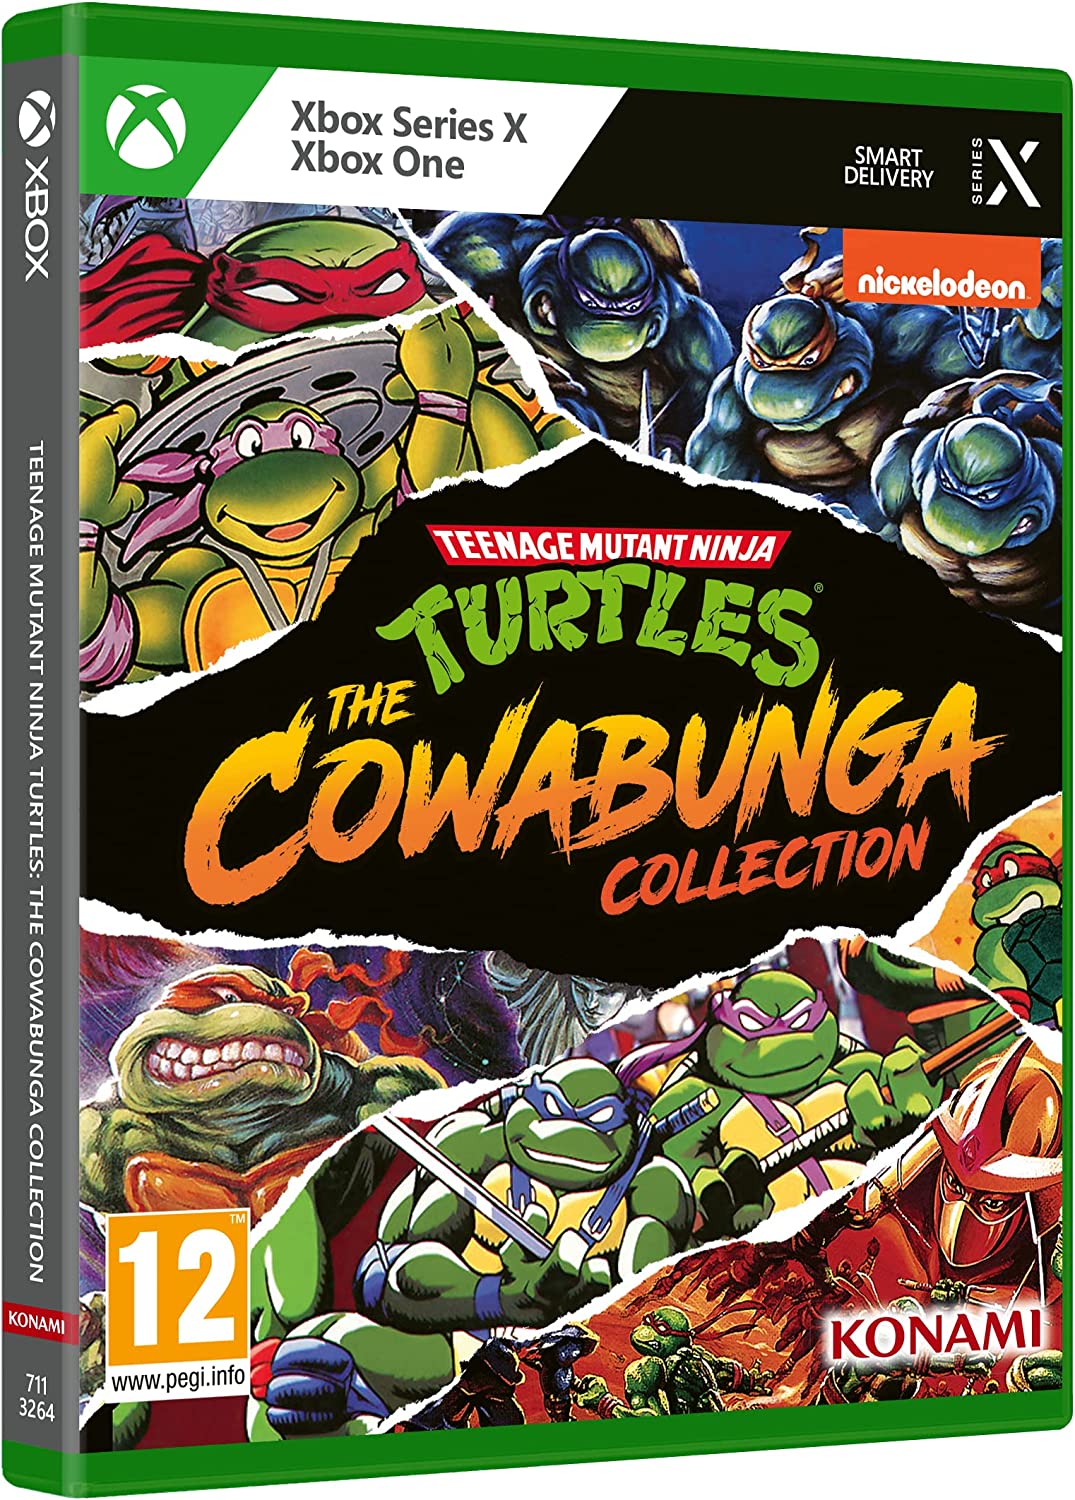 CD X|S Xbox Series for Collection The Turtles: Ninja Key Teenage Cowabunga Mutant Download) (Digital